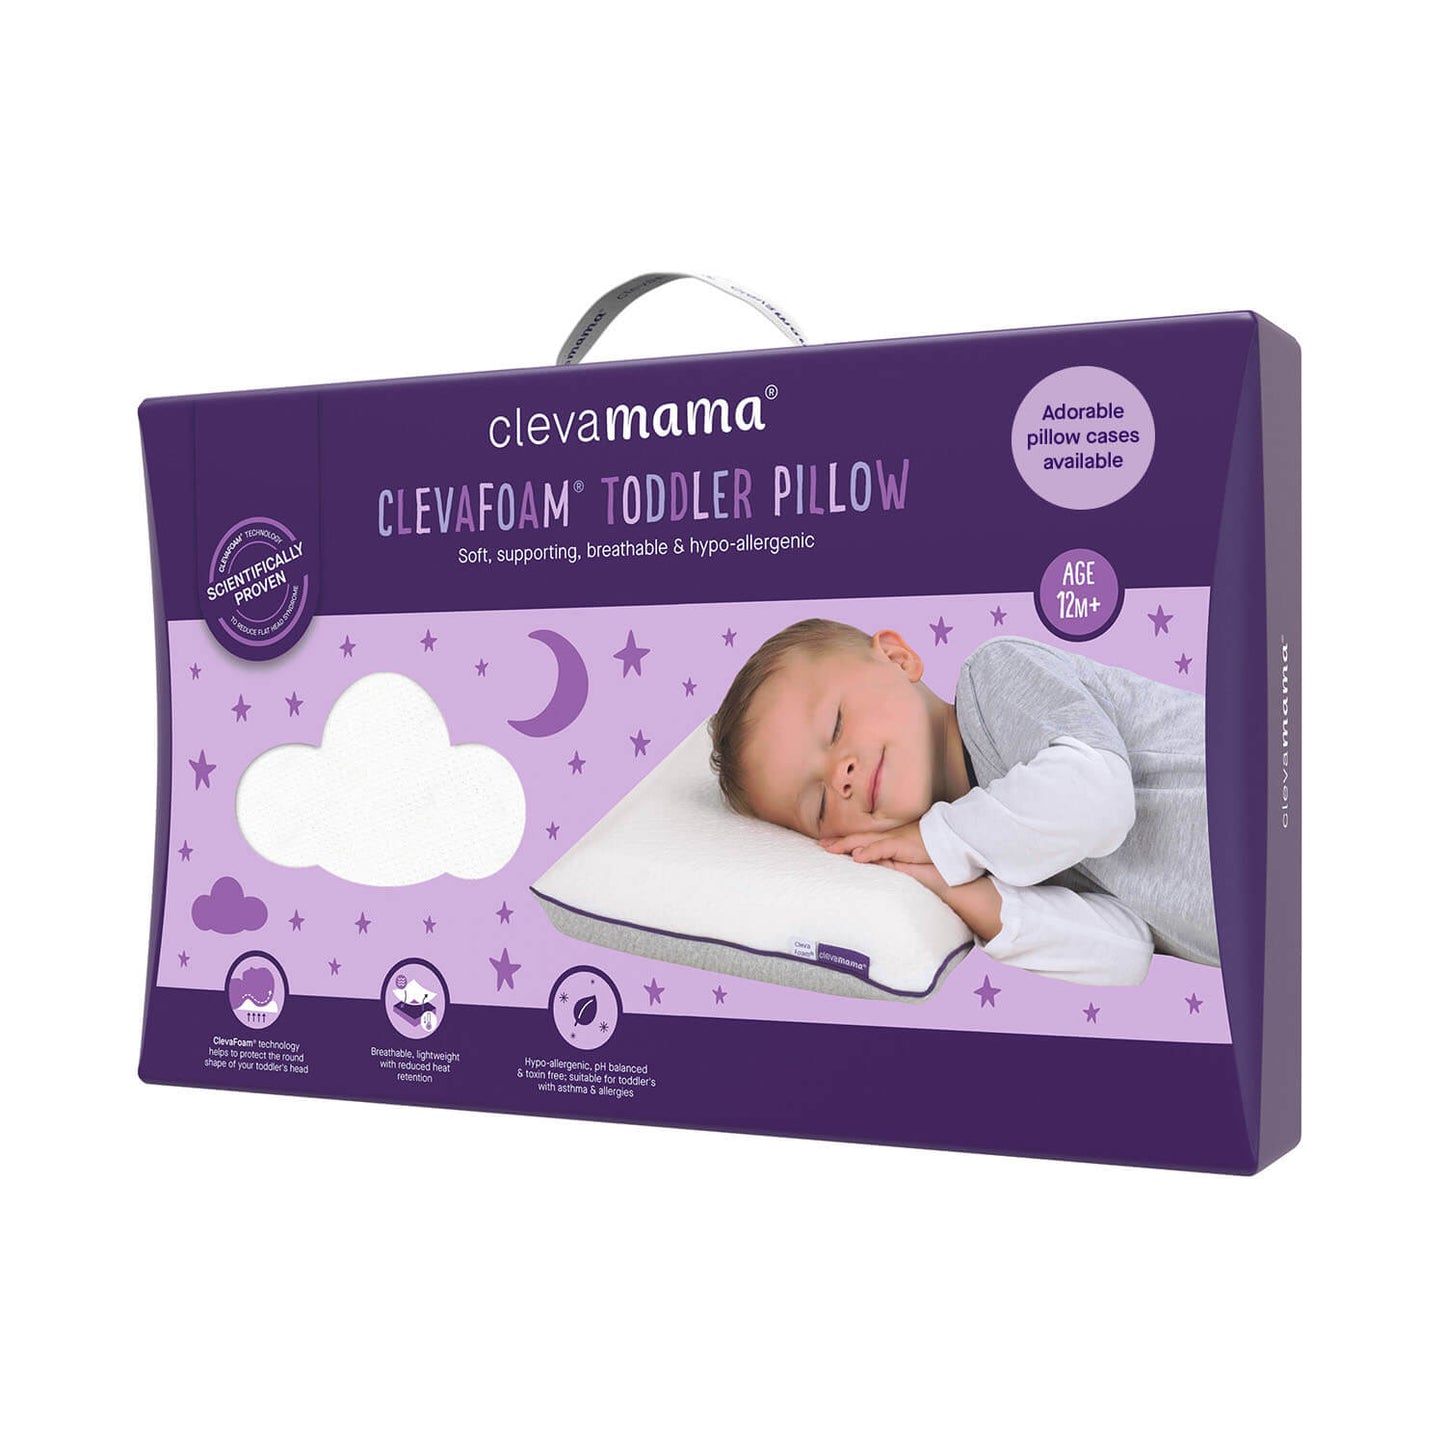 Clevamama ClevaFoam® Toddler Pillow